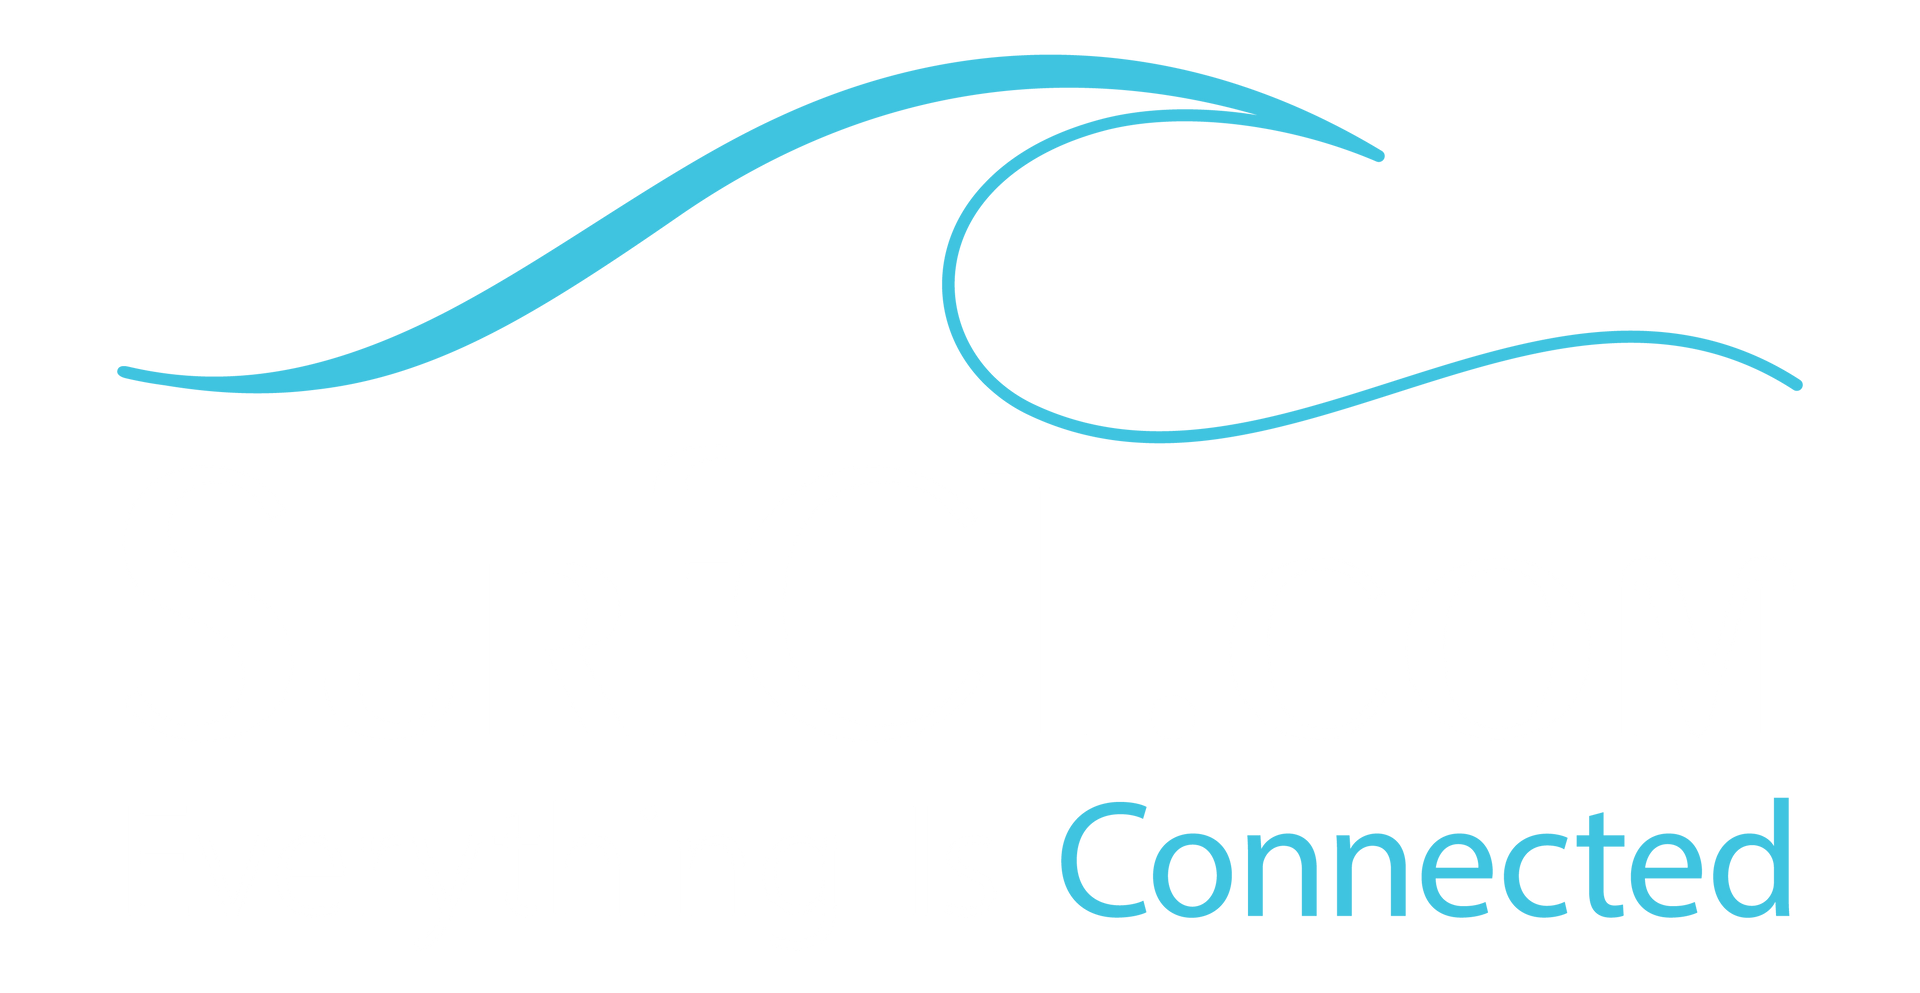 SurfCT logo